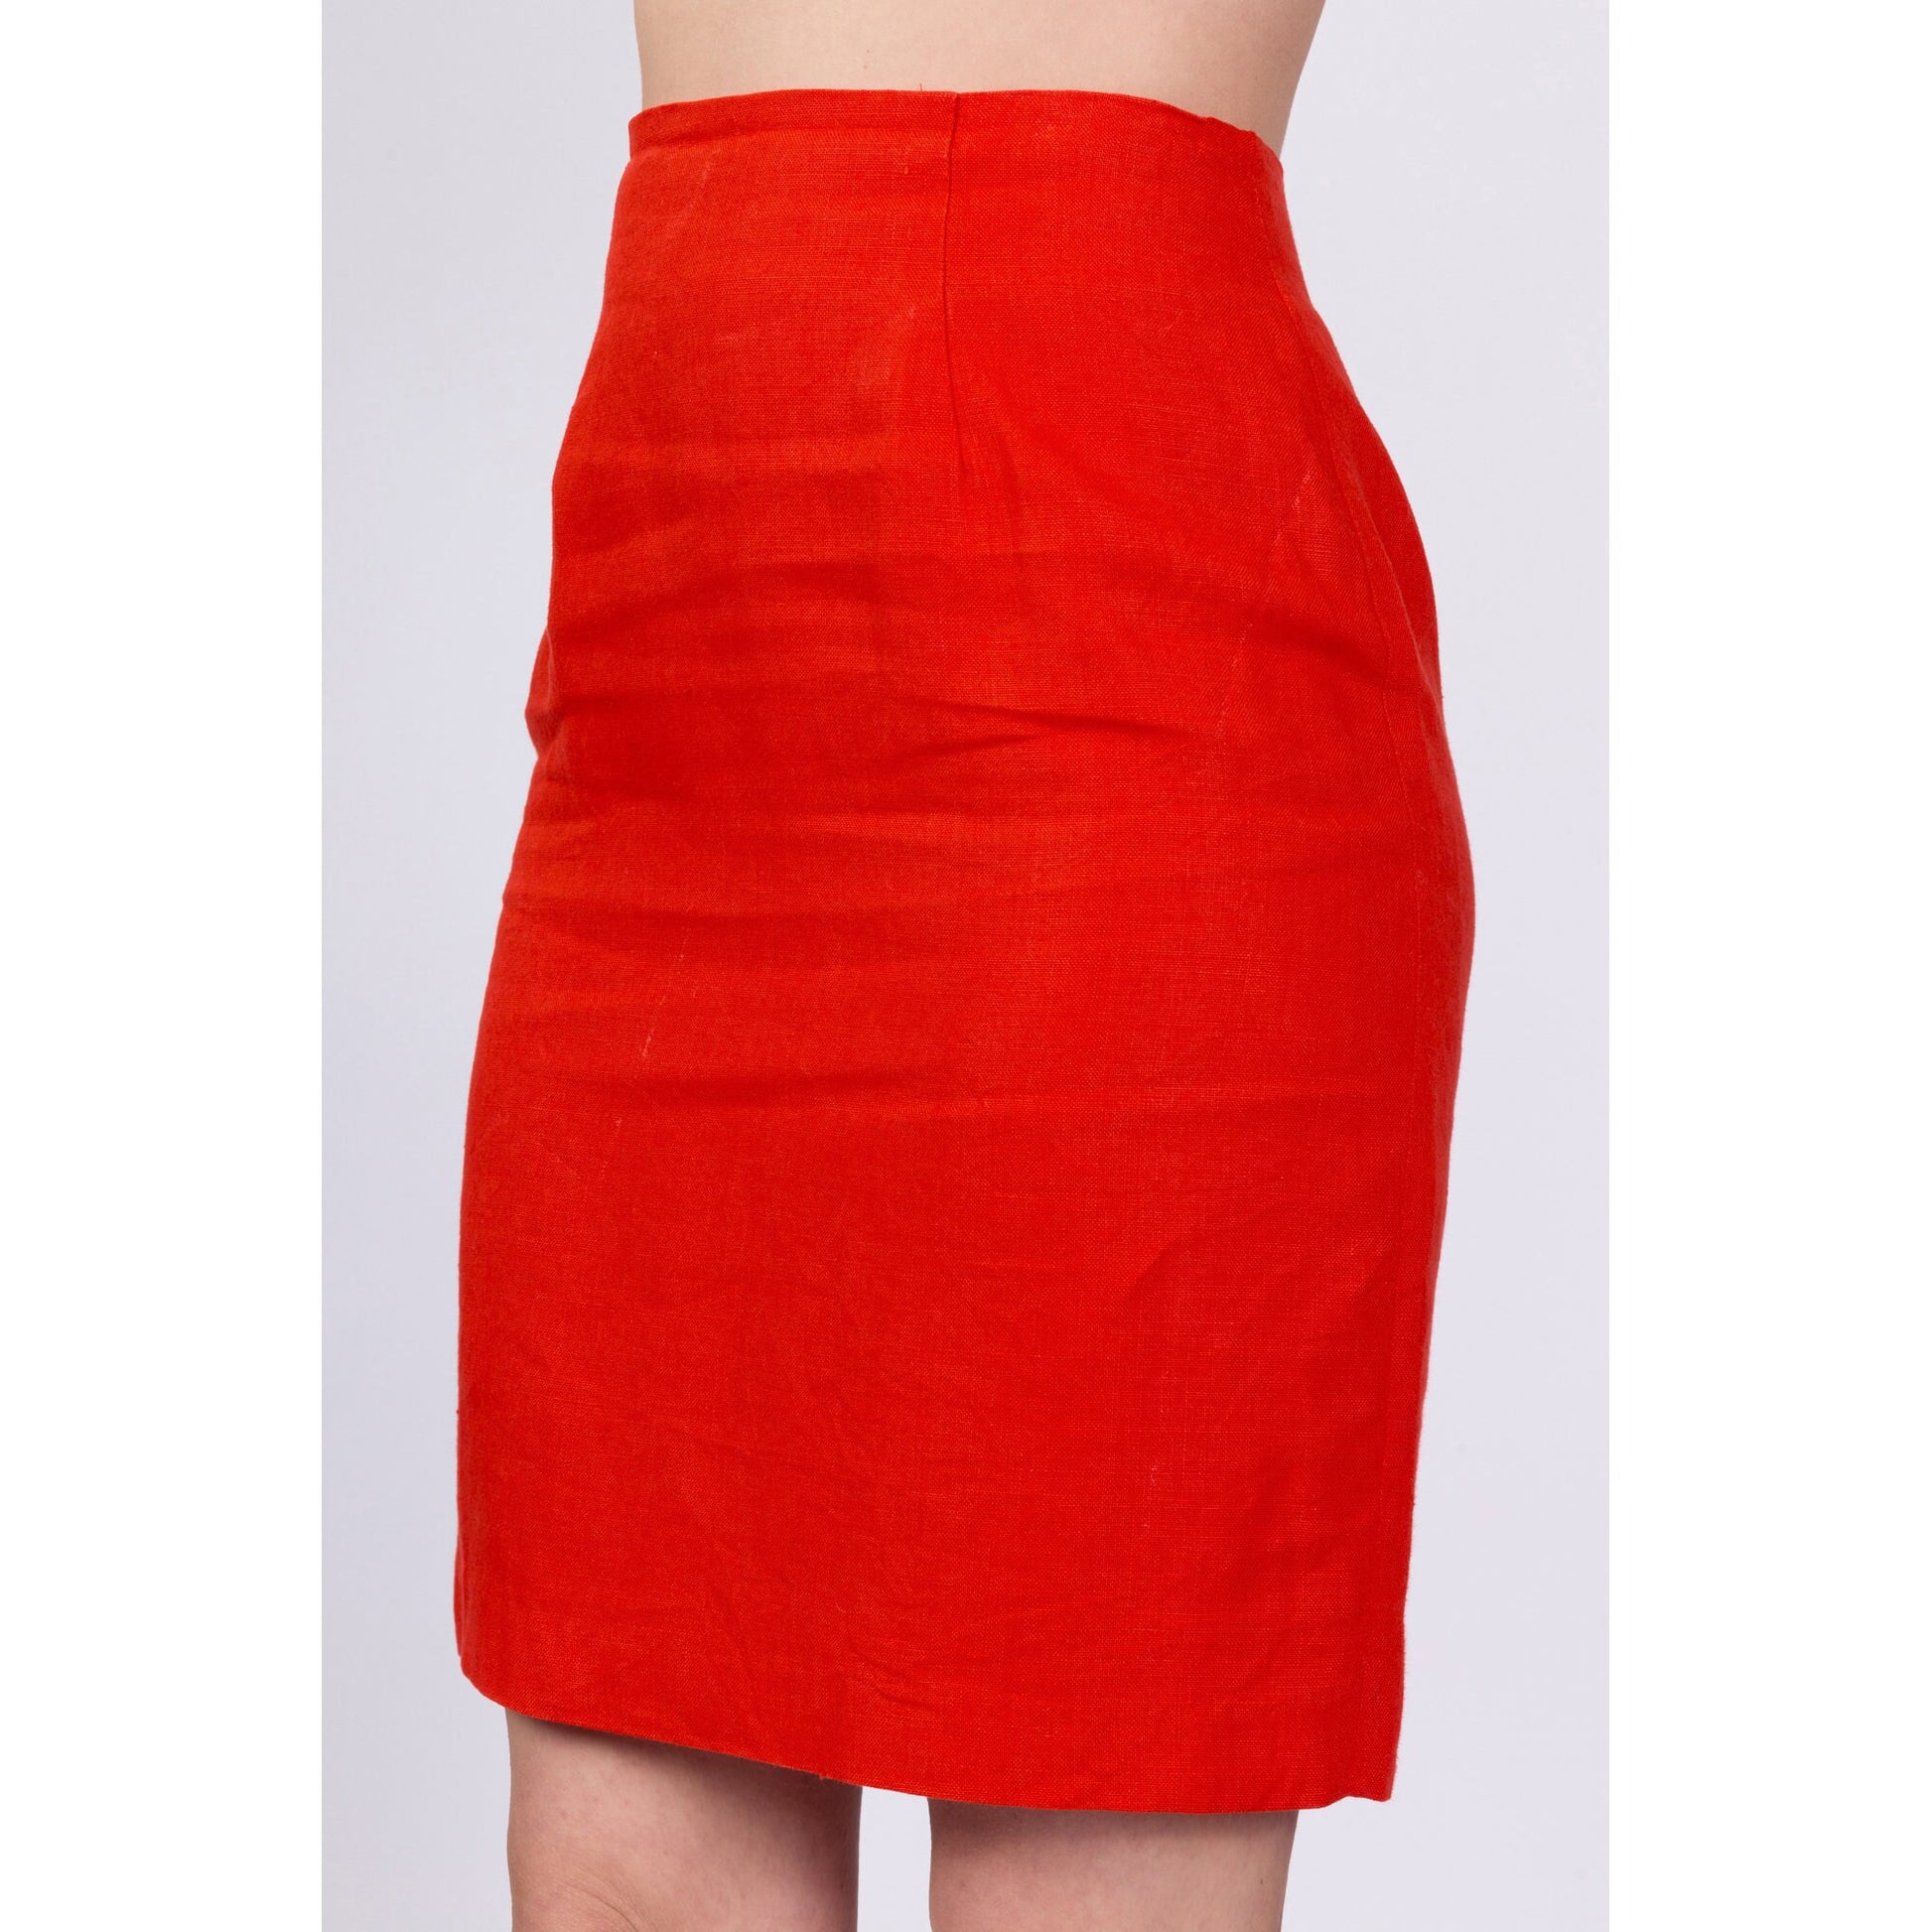 70s Red-Orange Mini Pencil Skirt - Small, 27" 